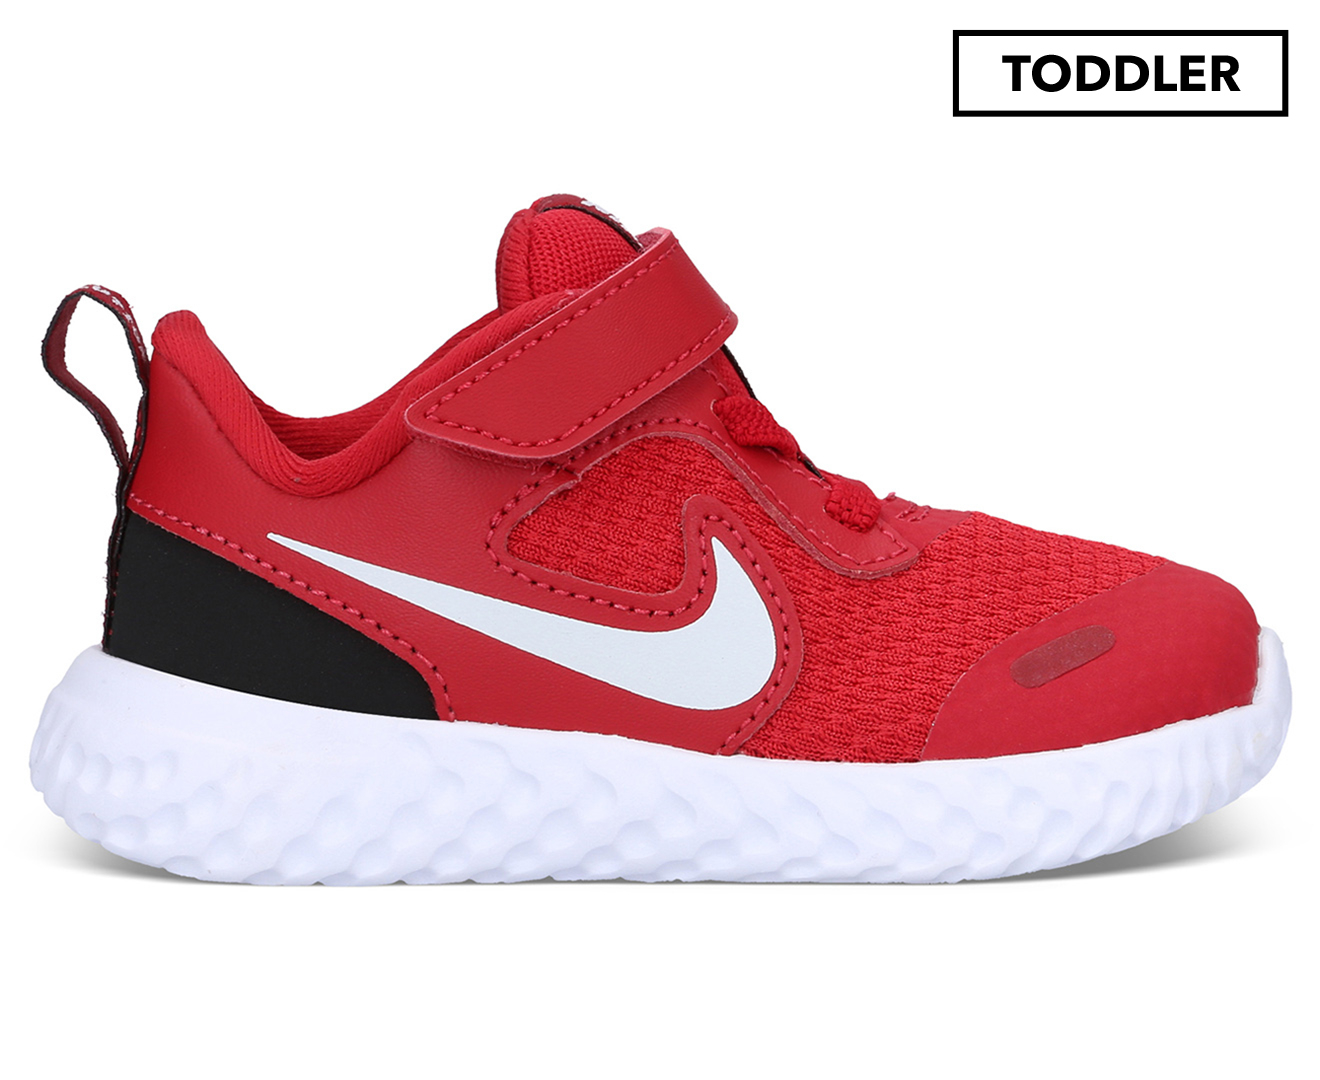 Nike Toddler Boys' Revolution 5 Running Shoes - Gym Red/White/Black ...